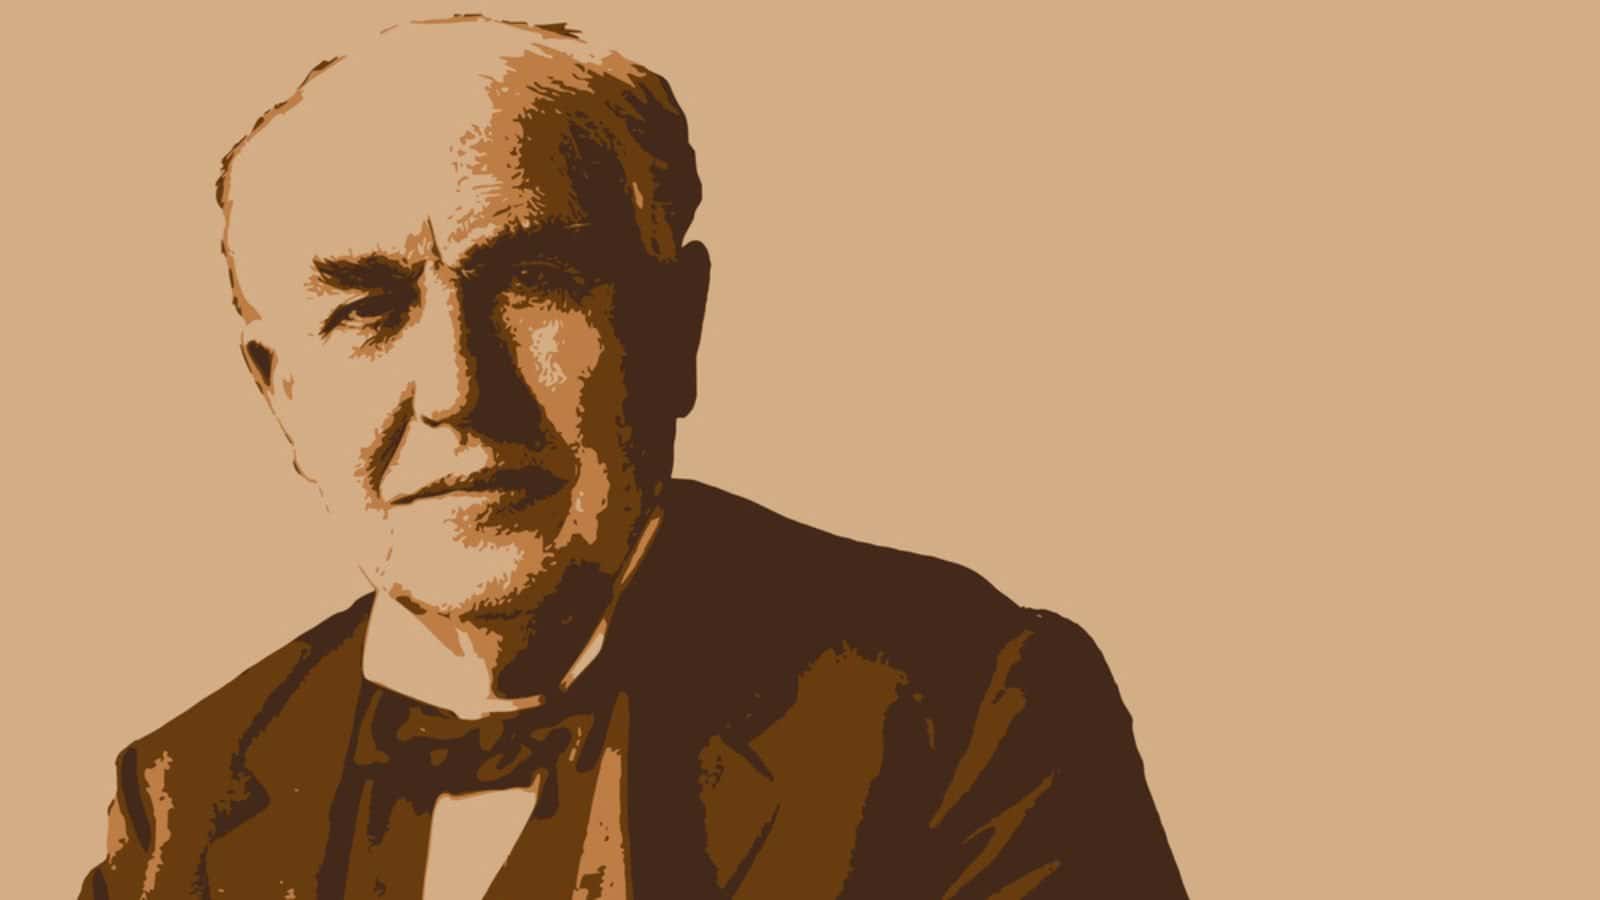 A drawn portrait of Thomas Edison